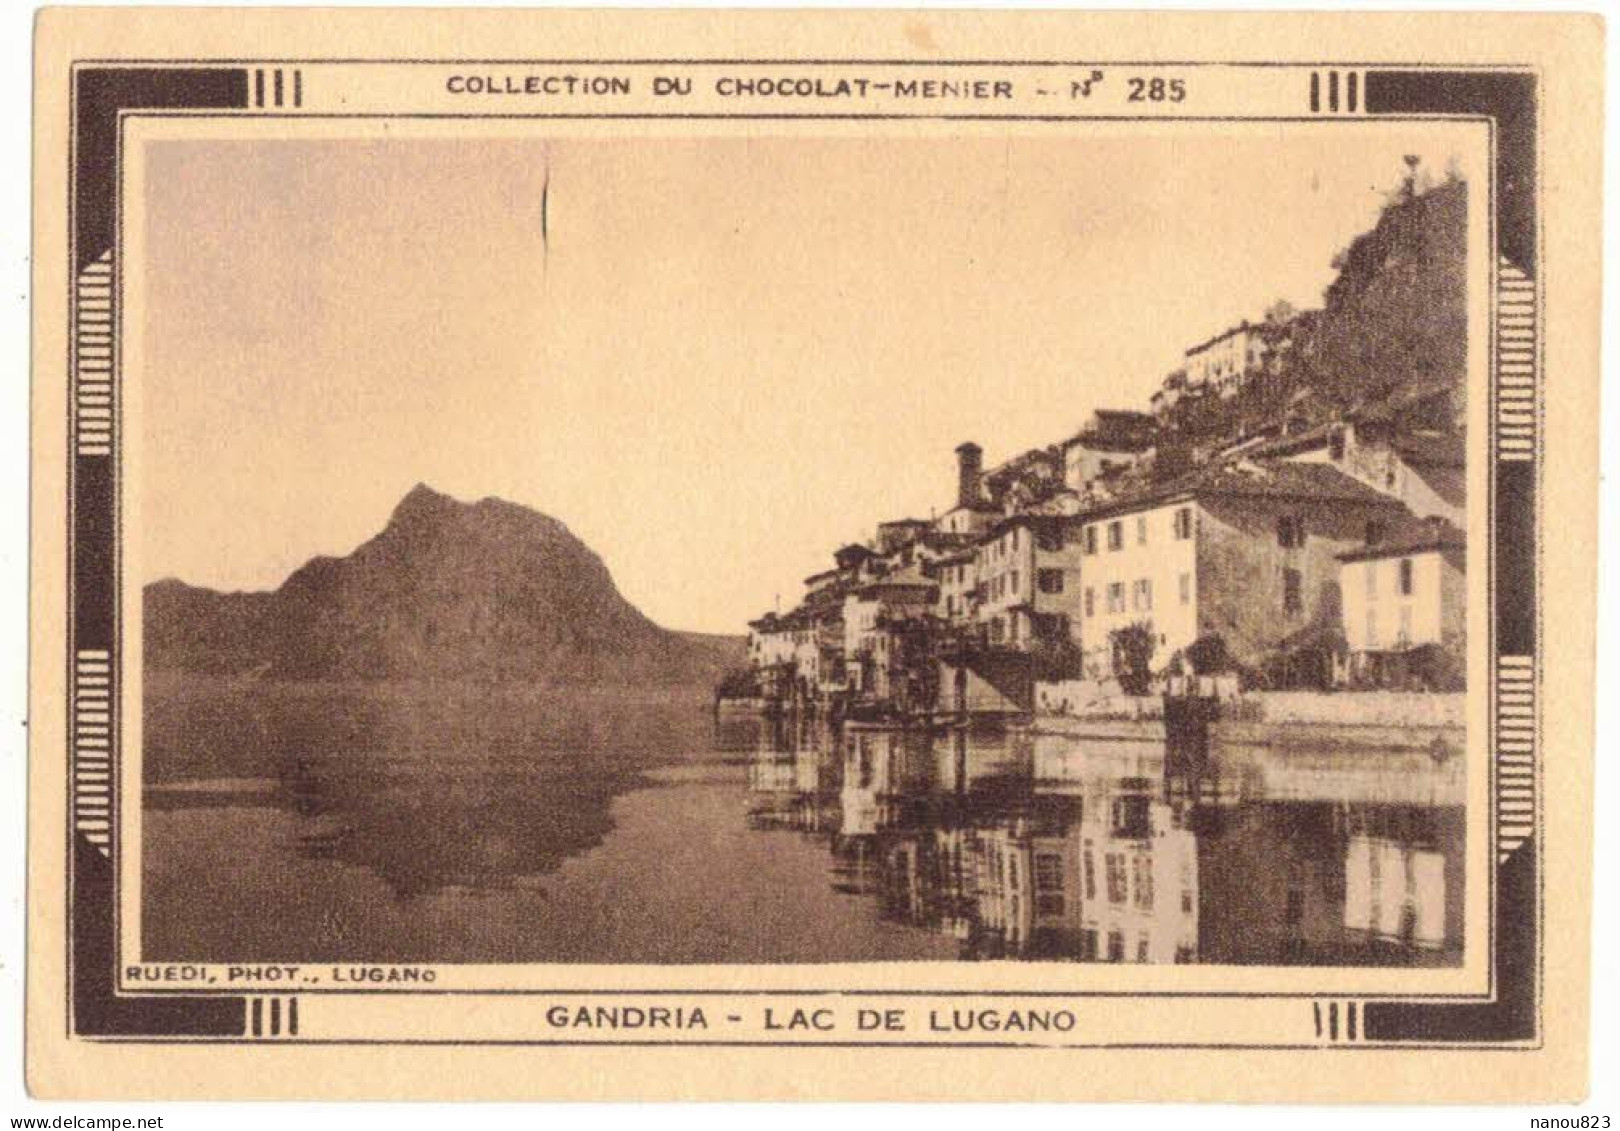 IMAGE CHROMO CHOCOLAT MENIER ALIMENTATION N° 285 SUISSE SWISS GANDRIA LAC DE LUGANO TOURISME TESSIN MONTE BRE - Menier